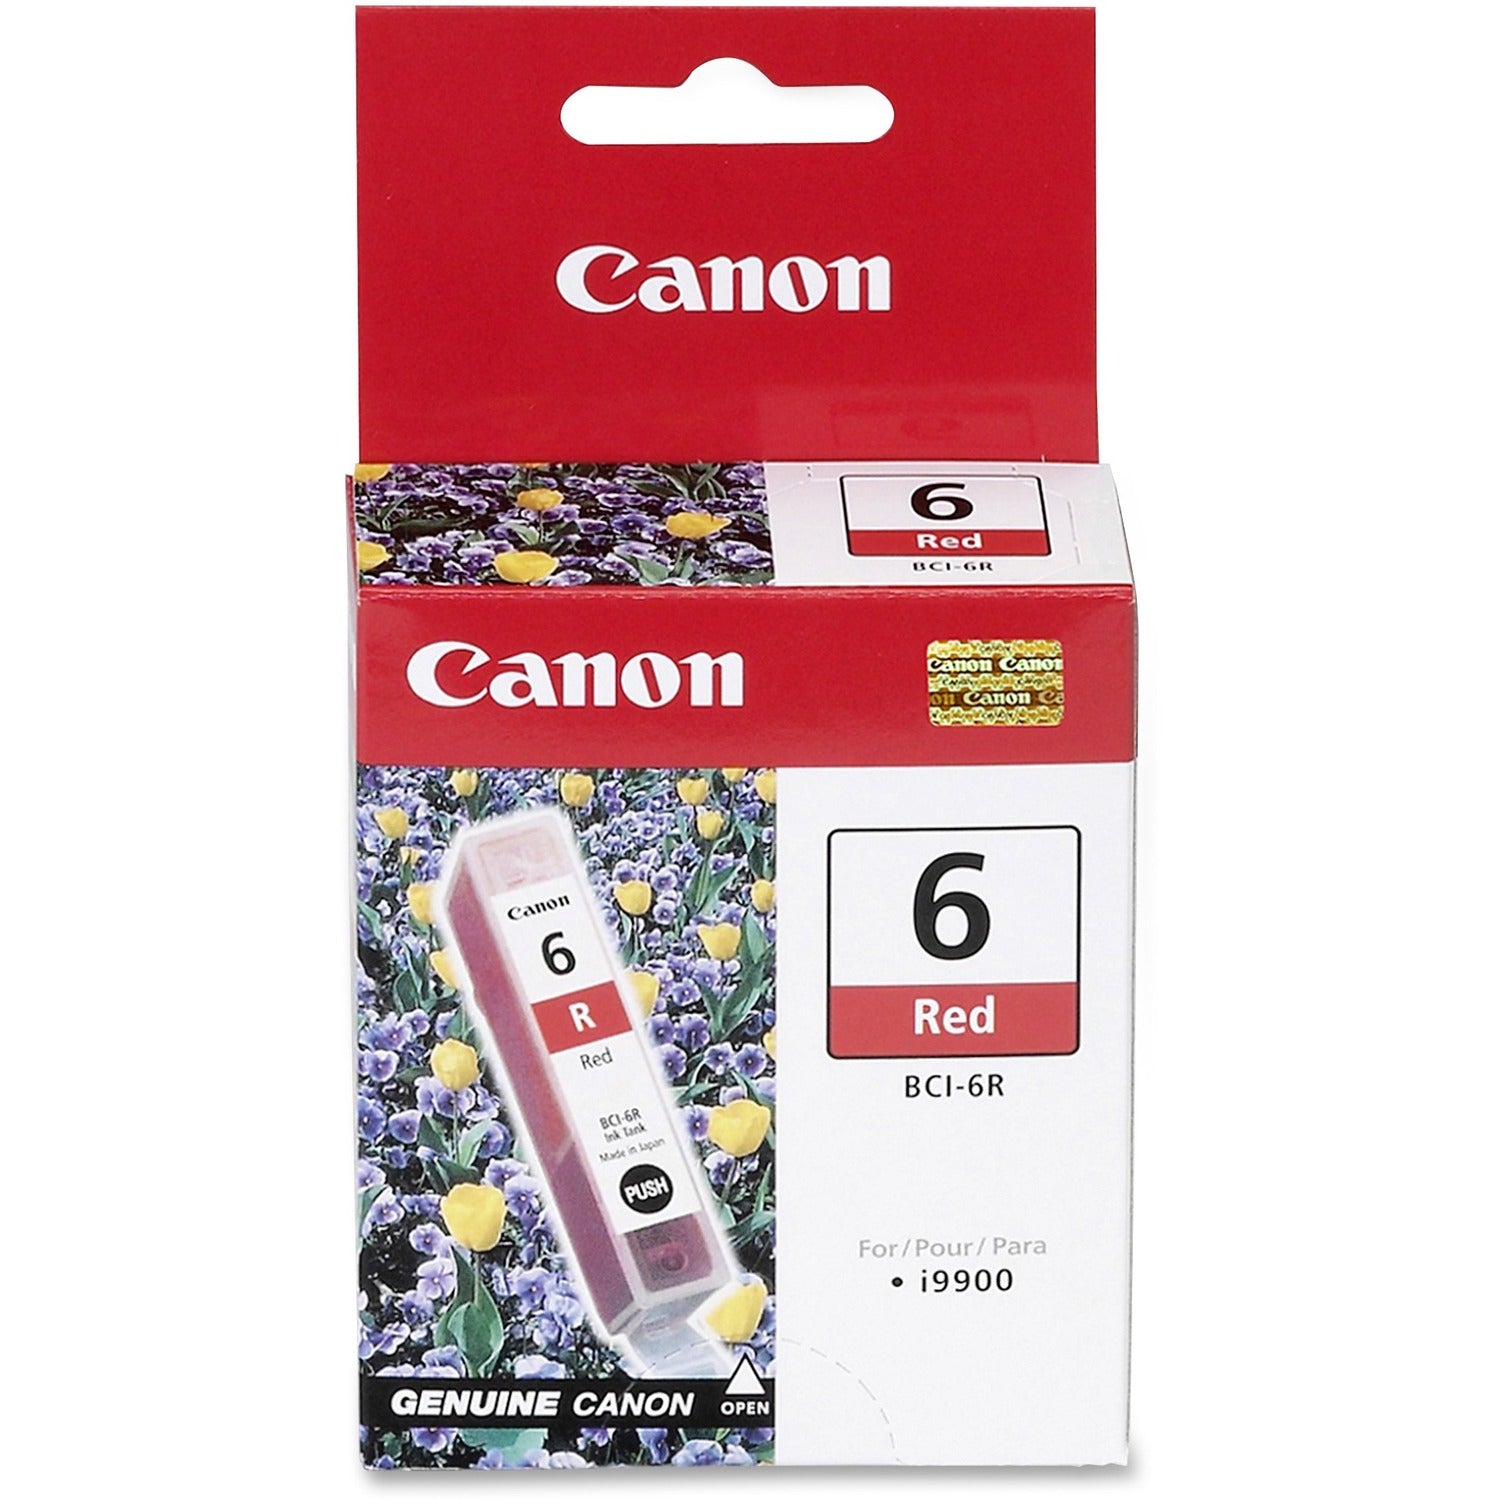 Canon BCI-6R Original Ink Cartridge